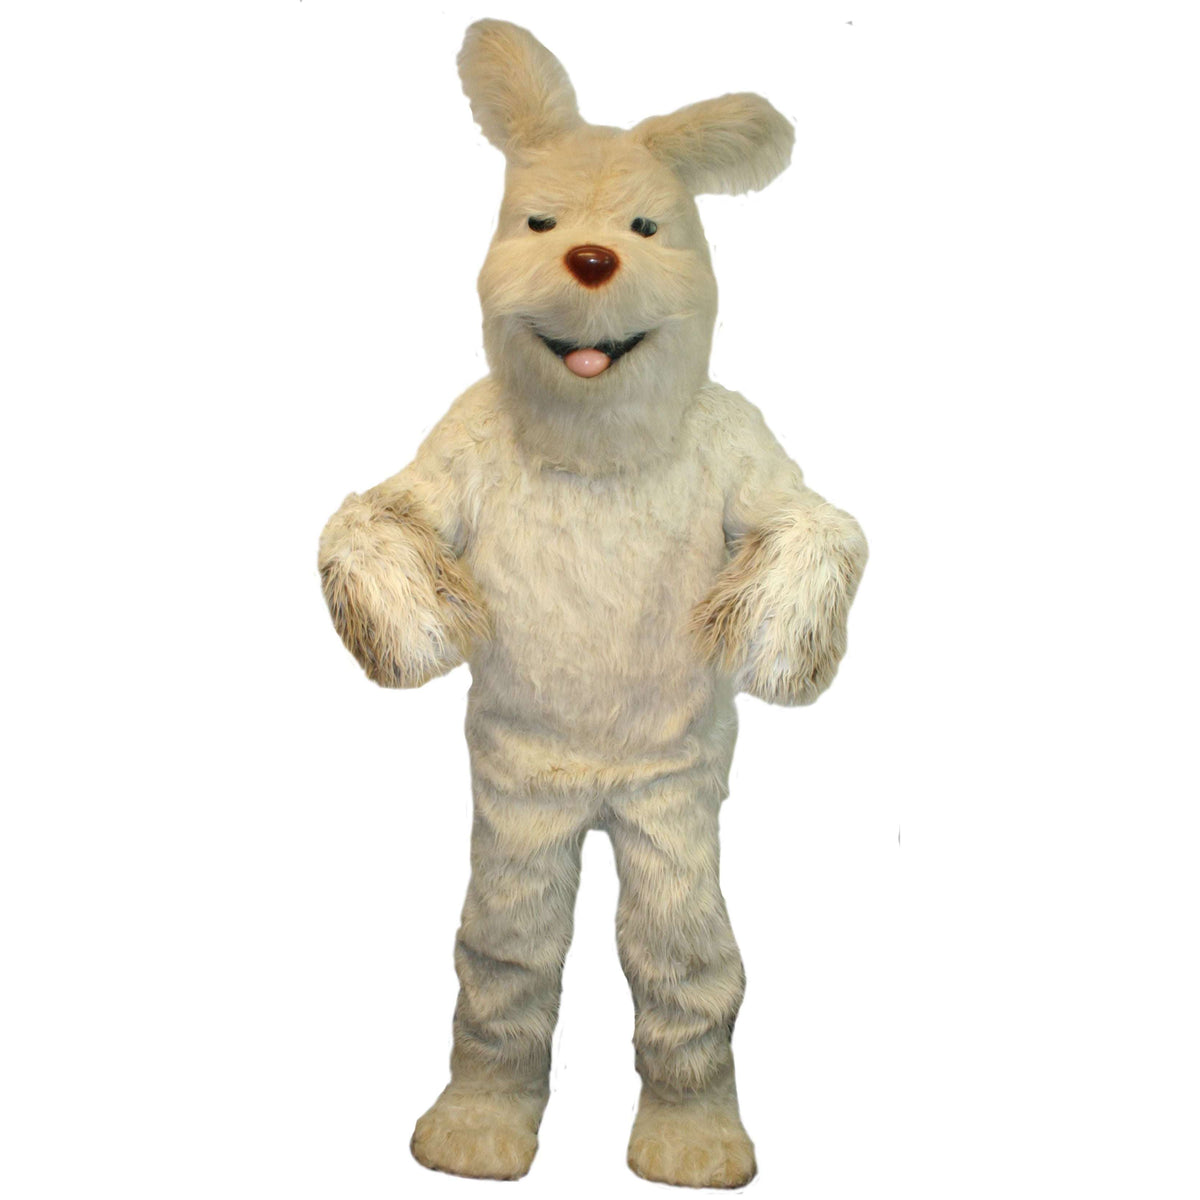 White Shaggy Dog Adult Mascot Costume